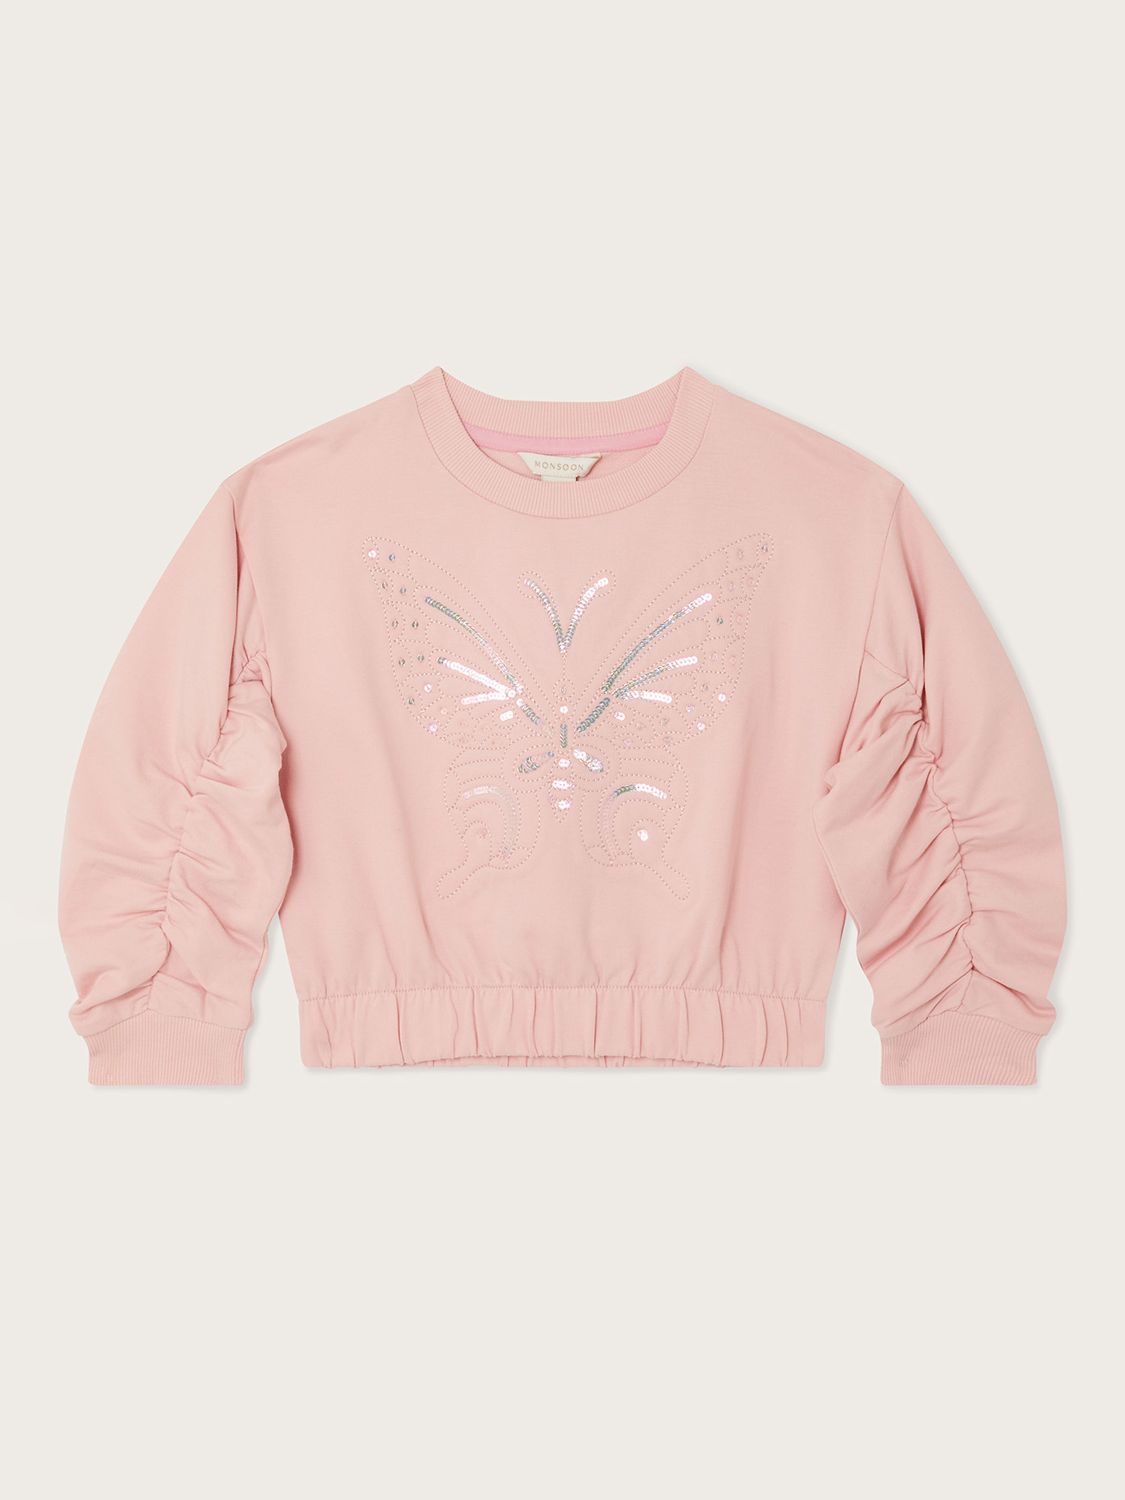 Monsoon Kids' Butterfly Cropped Sweatshirt, Pink at John Lewis & Partners